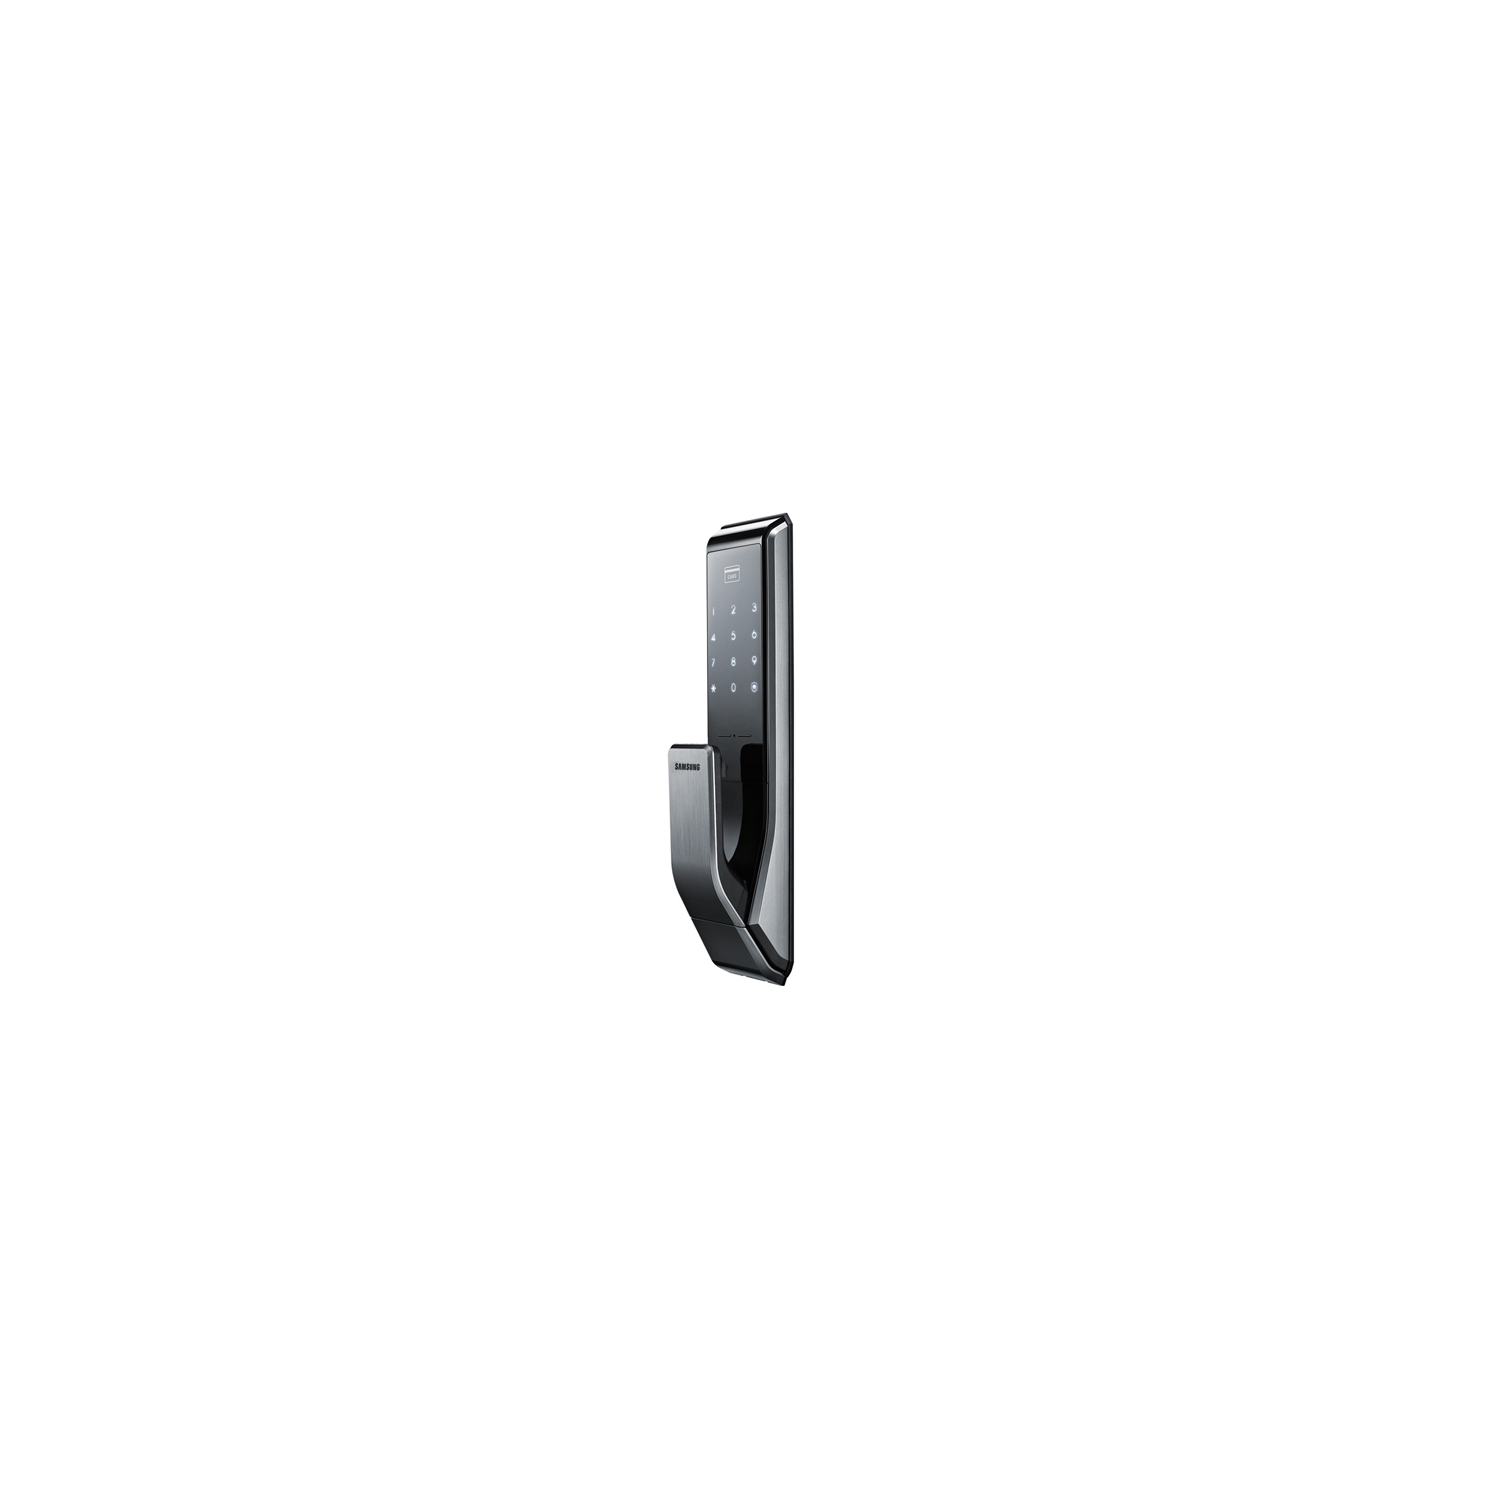 Samsung Smart Digital Push and Pull Handle Mortise Door Lock (SHS-P717 LMK/EN)